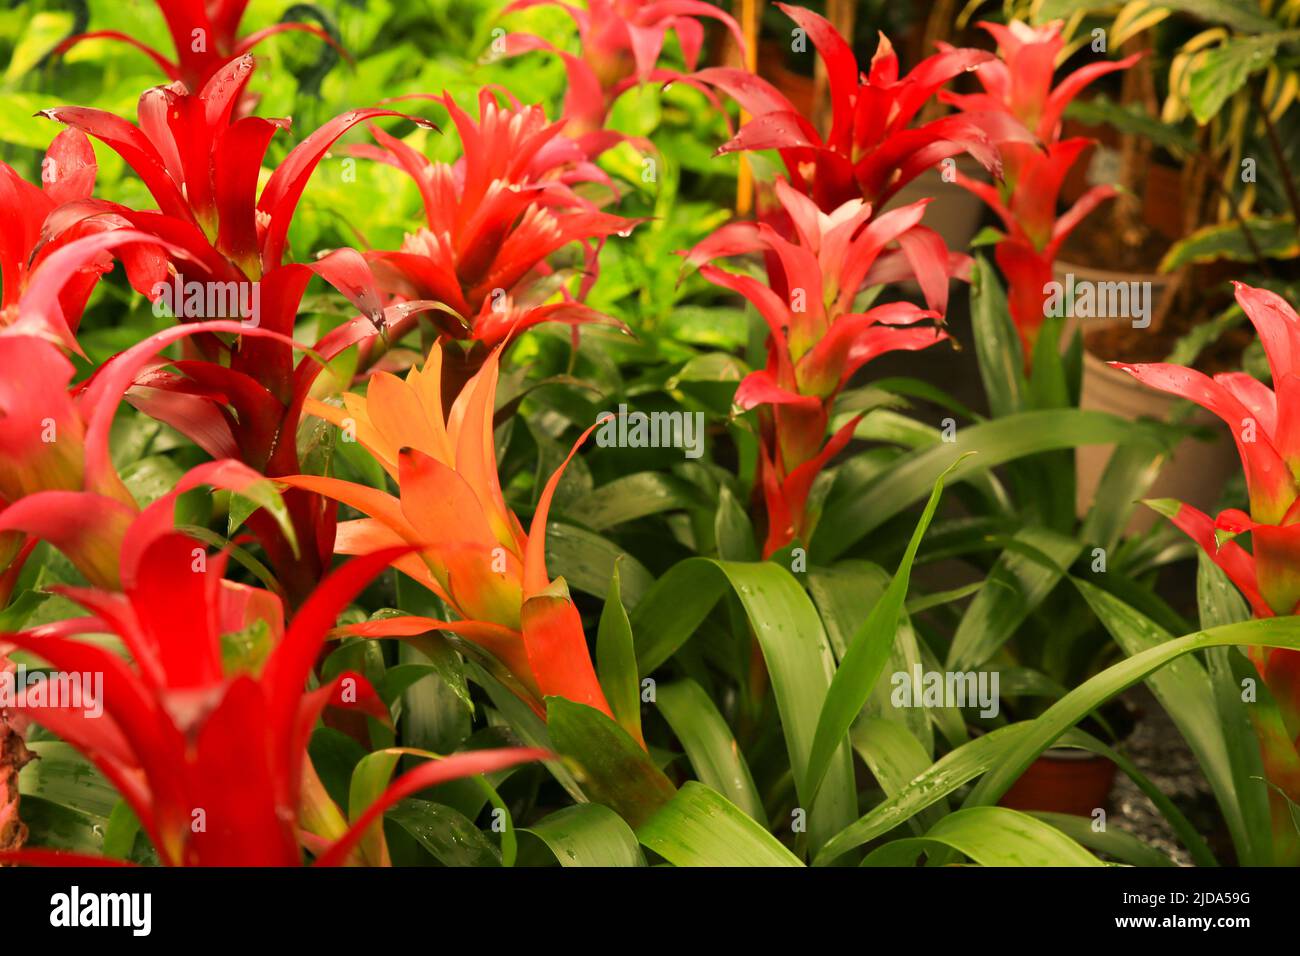 Colorful and beautiful Guzmania Monostachia Rusby plants in the garden Stock Photo